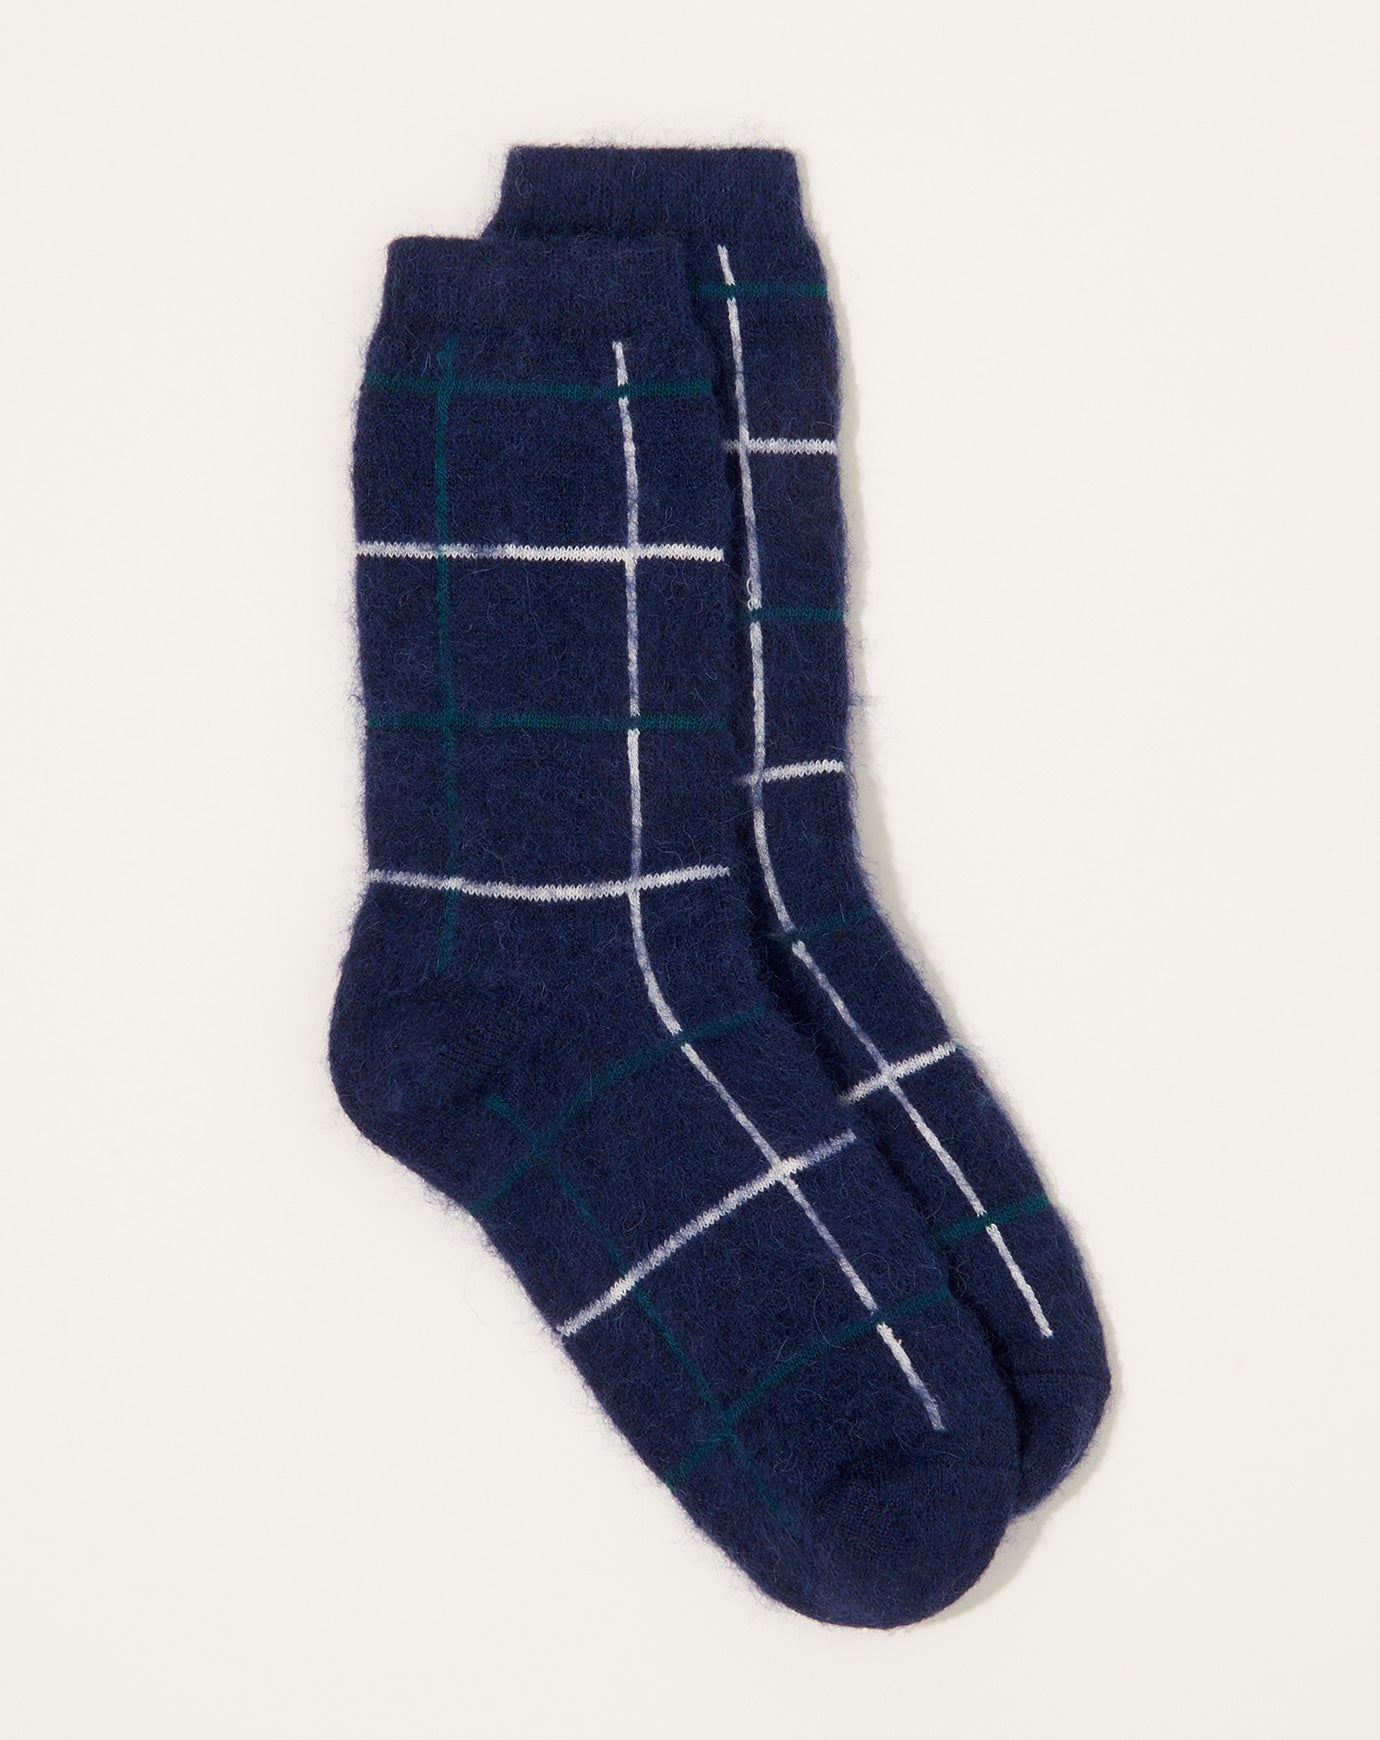 Exquisite J Brushed Mohair Tartan Socks in Navy